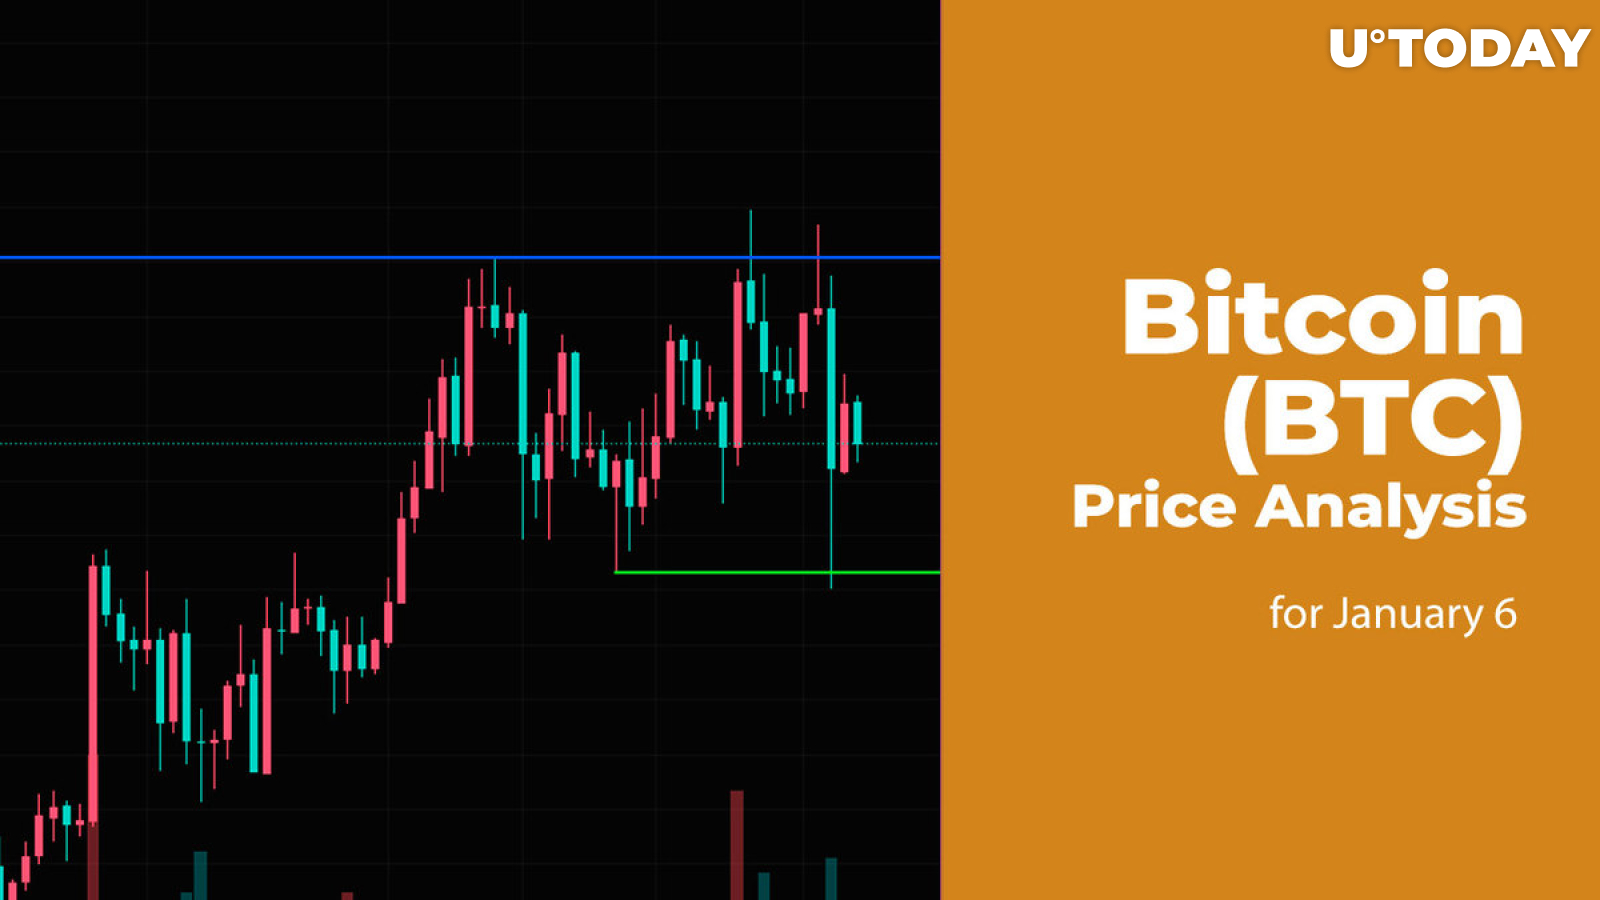 Bitcoin (BTC) prisanalyse for 6. januar